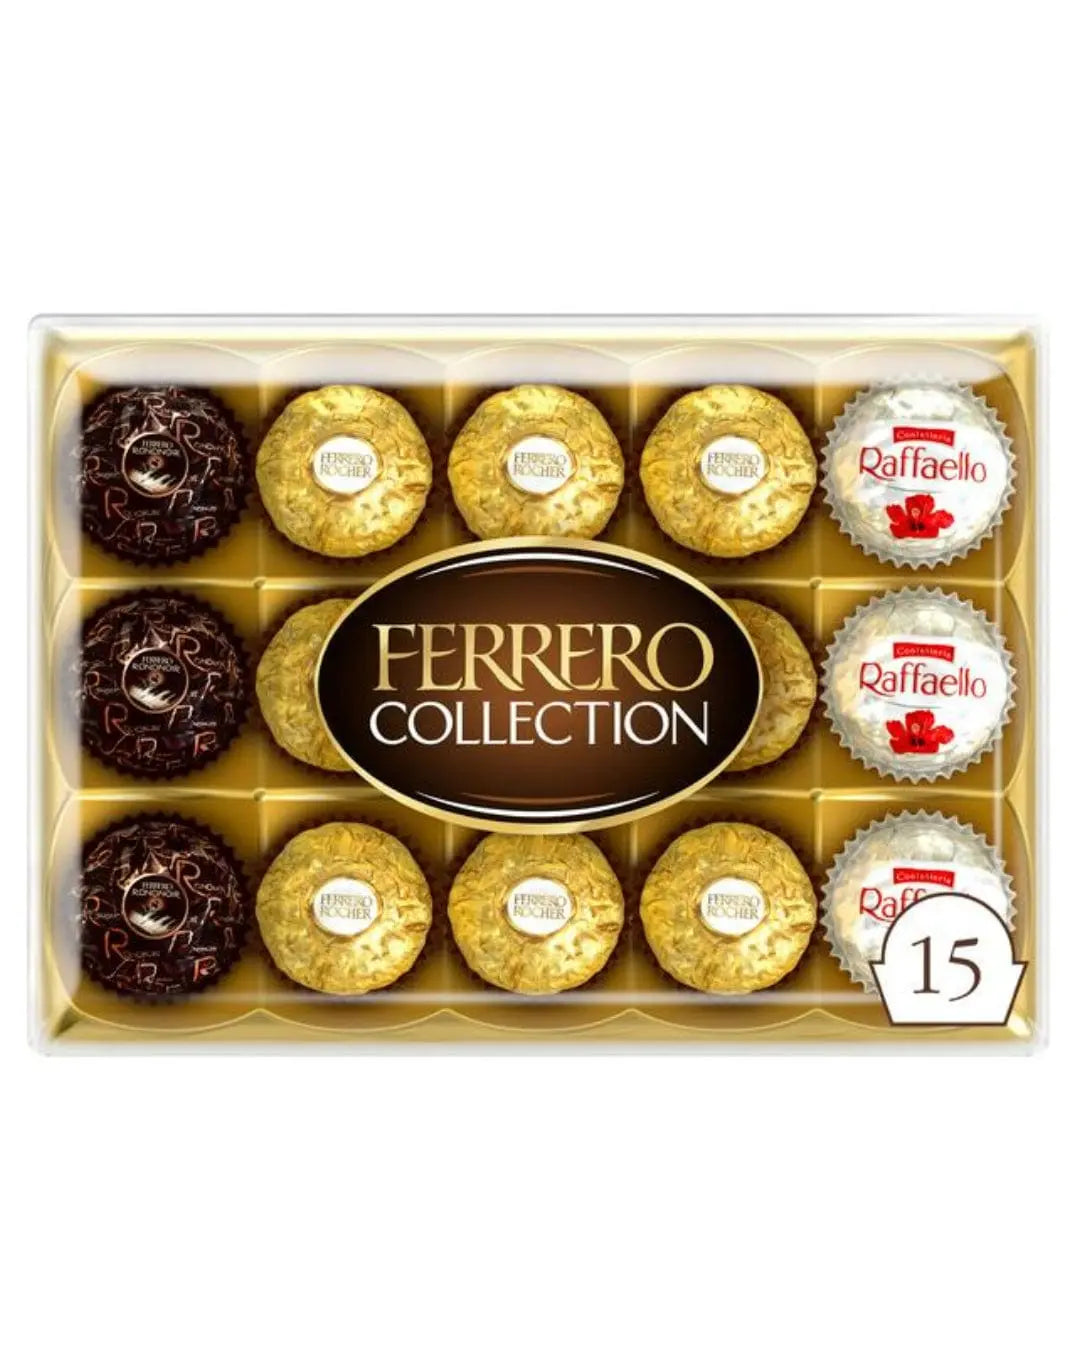 Ferrero Rocher 15 Pieces Chocolate Gift Box, 175 g Chocolate